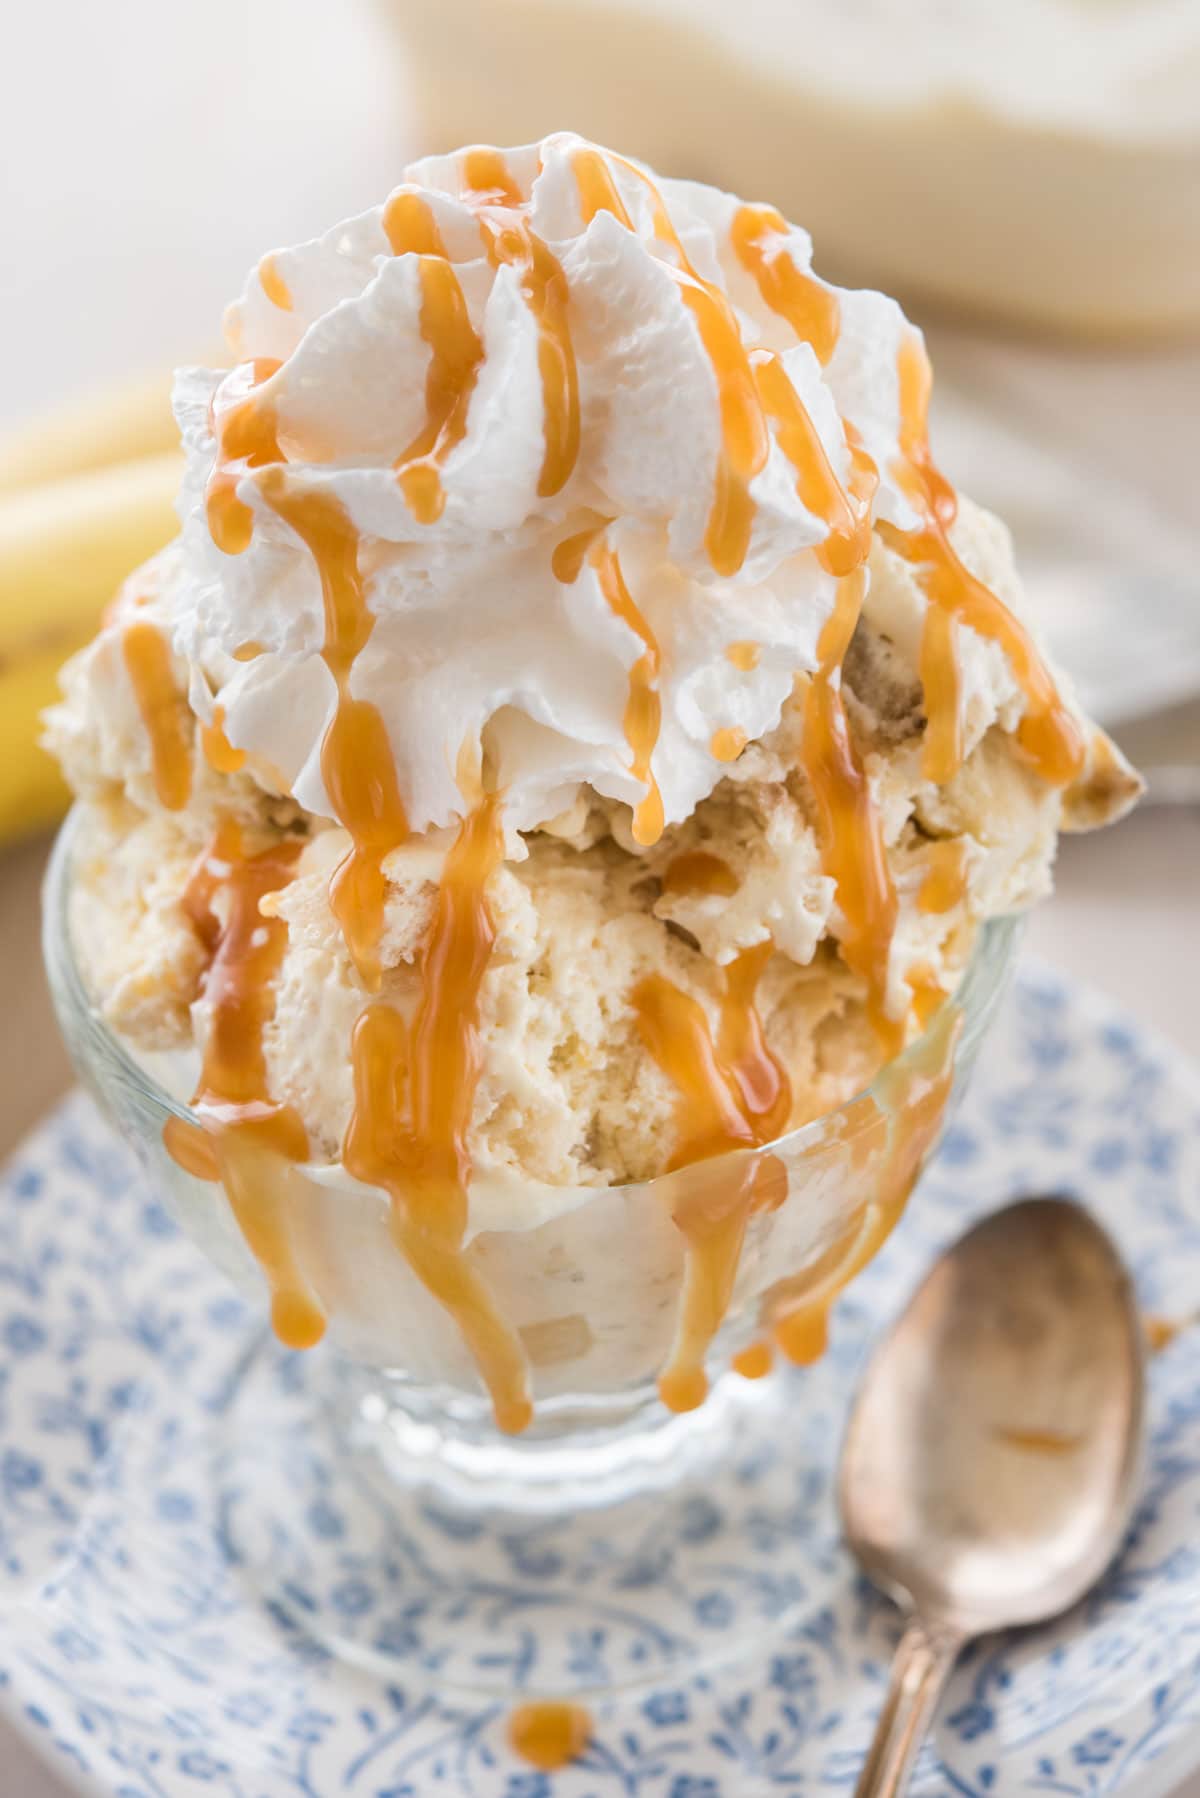 Easy Banana Cream Pie Ice Cream - this No Churn Ice Cream Recipe tastes just like a DQ Blizzard! 